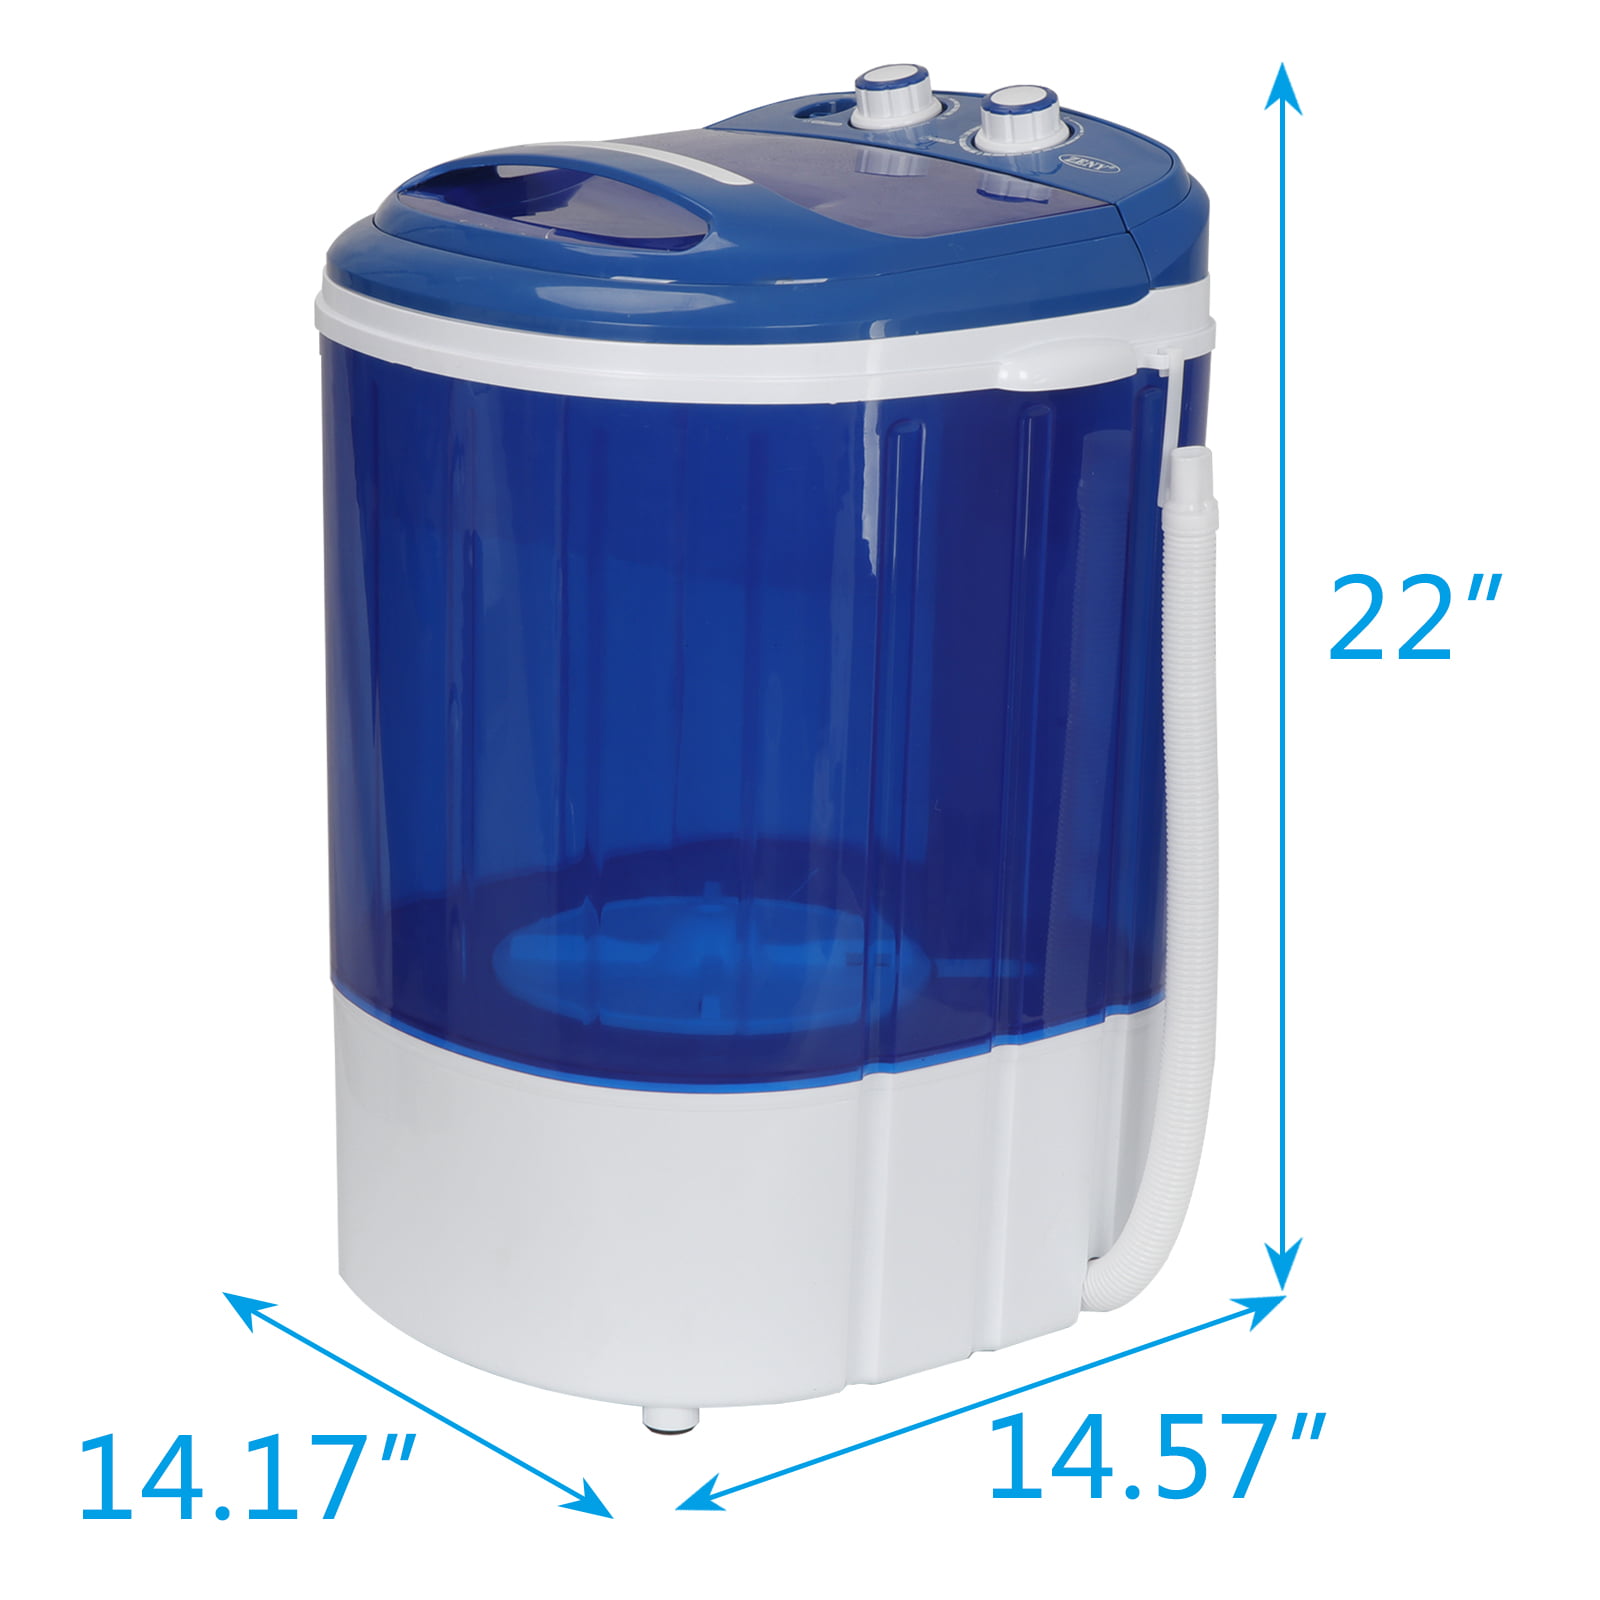 Zeny 9lbs Capacity Mini Washing Machine Compact Counter Top Washer